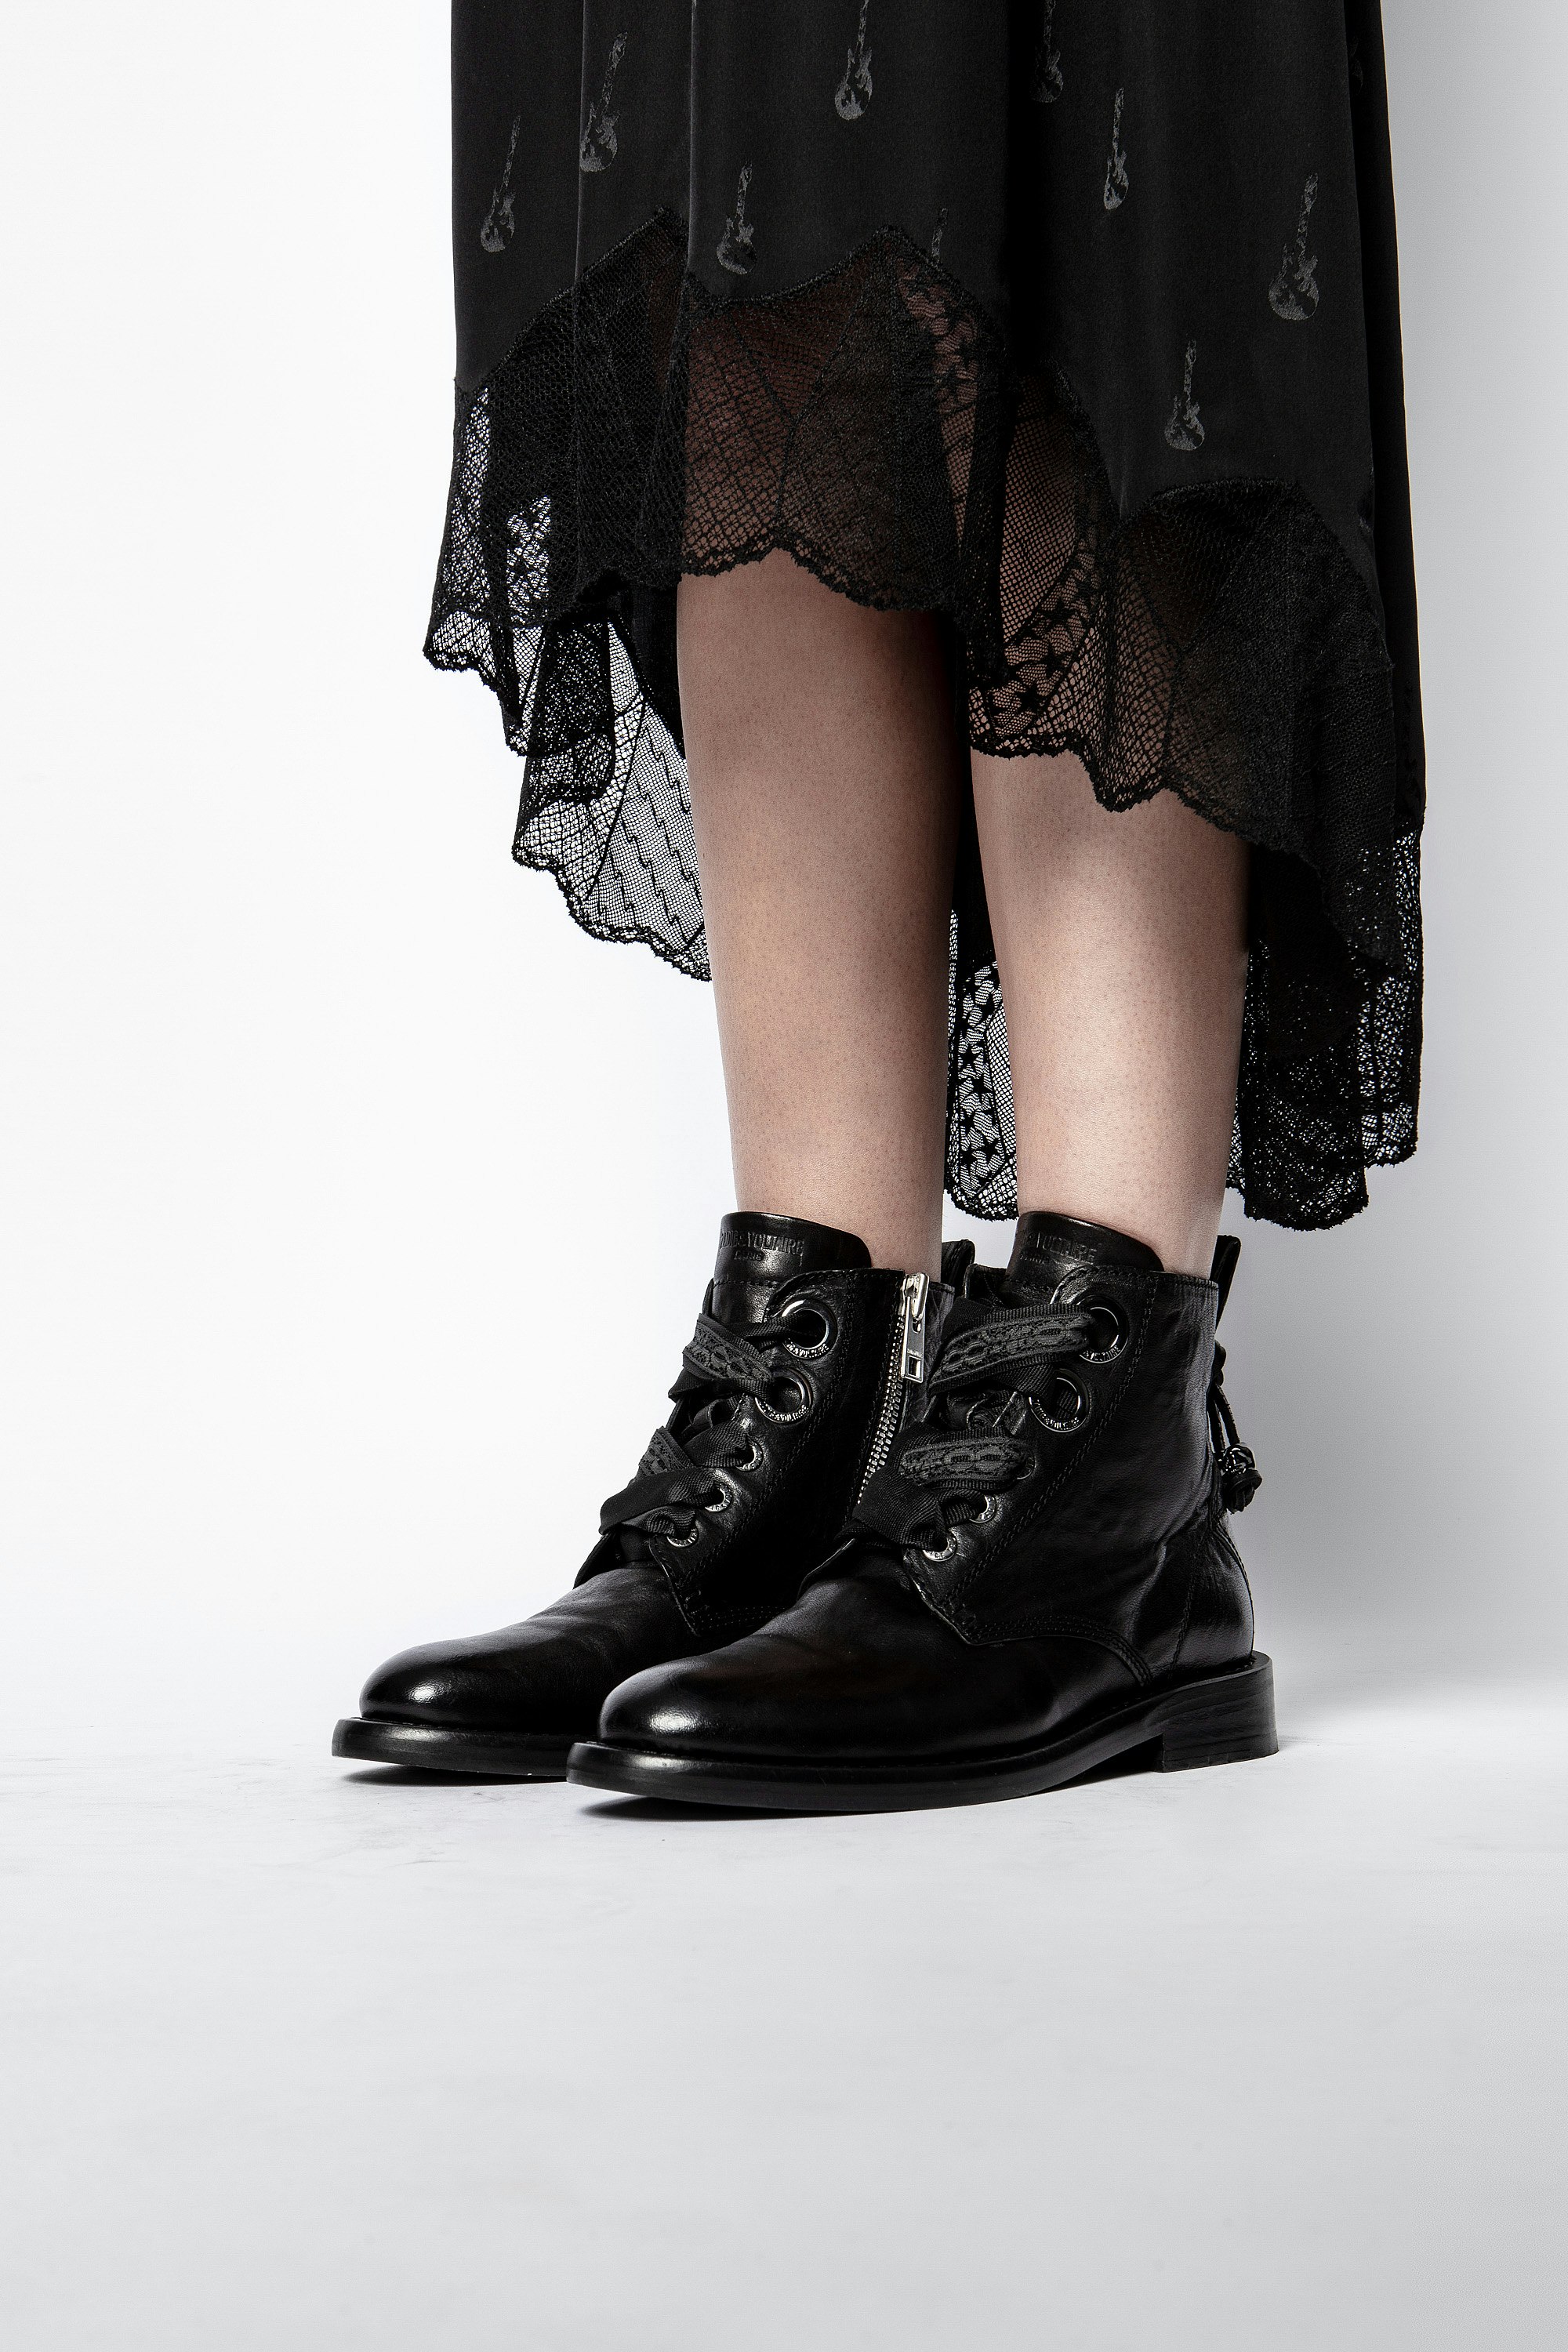 Laureen Roma Boots - boots women's 